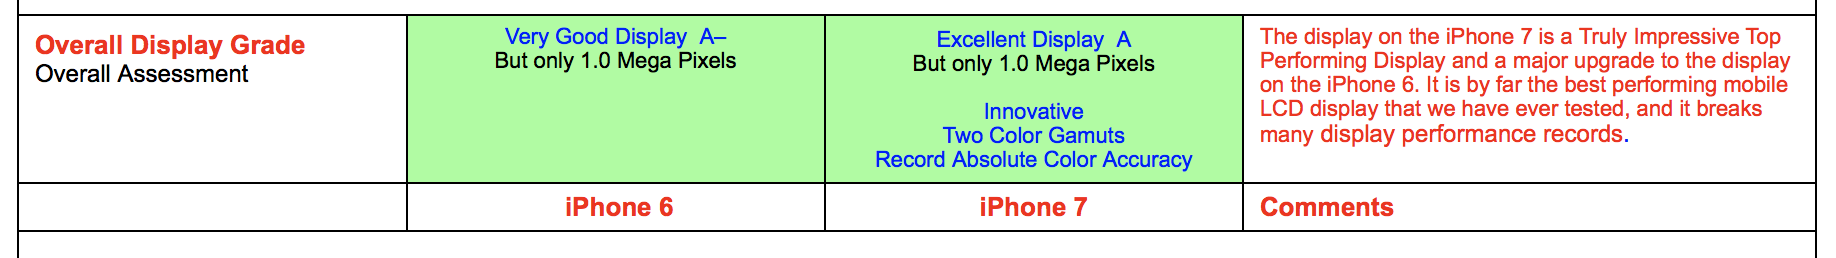 iphone7-iphone6-display_2